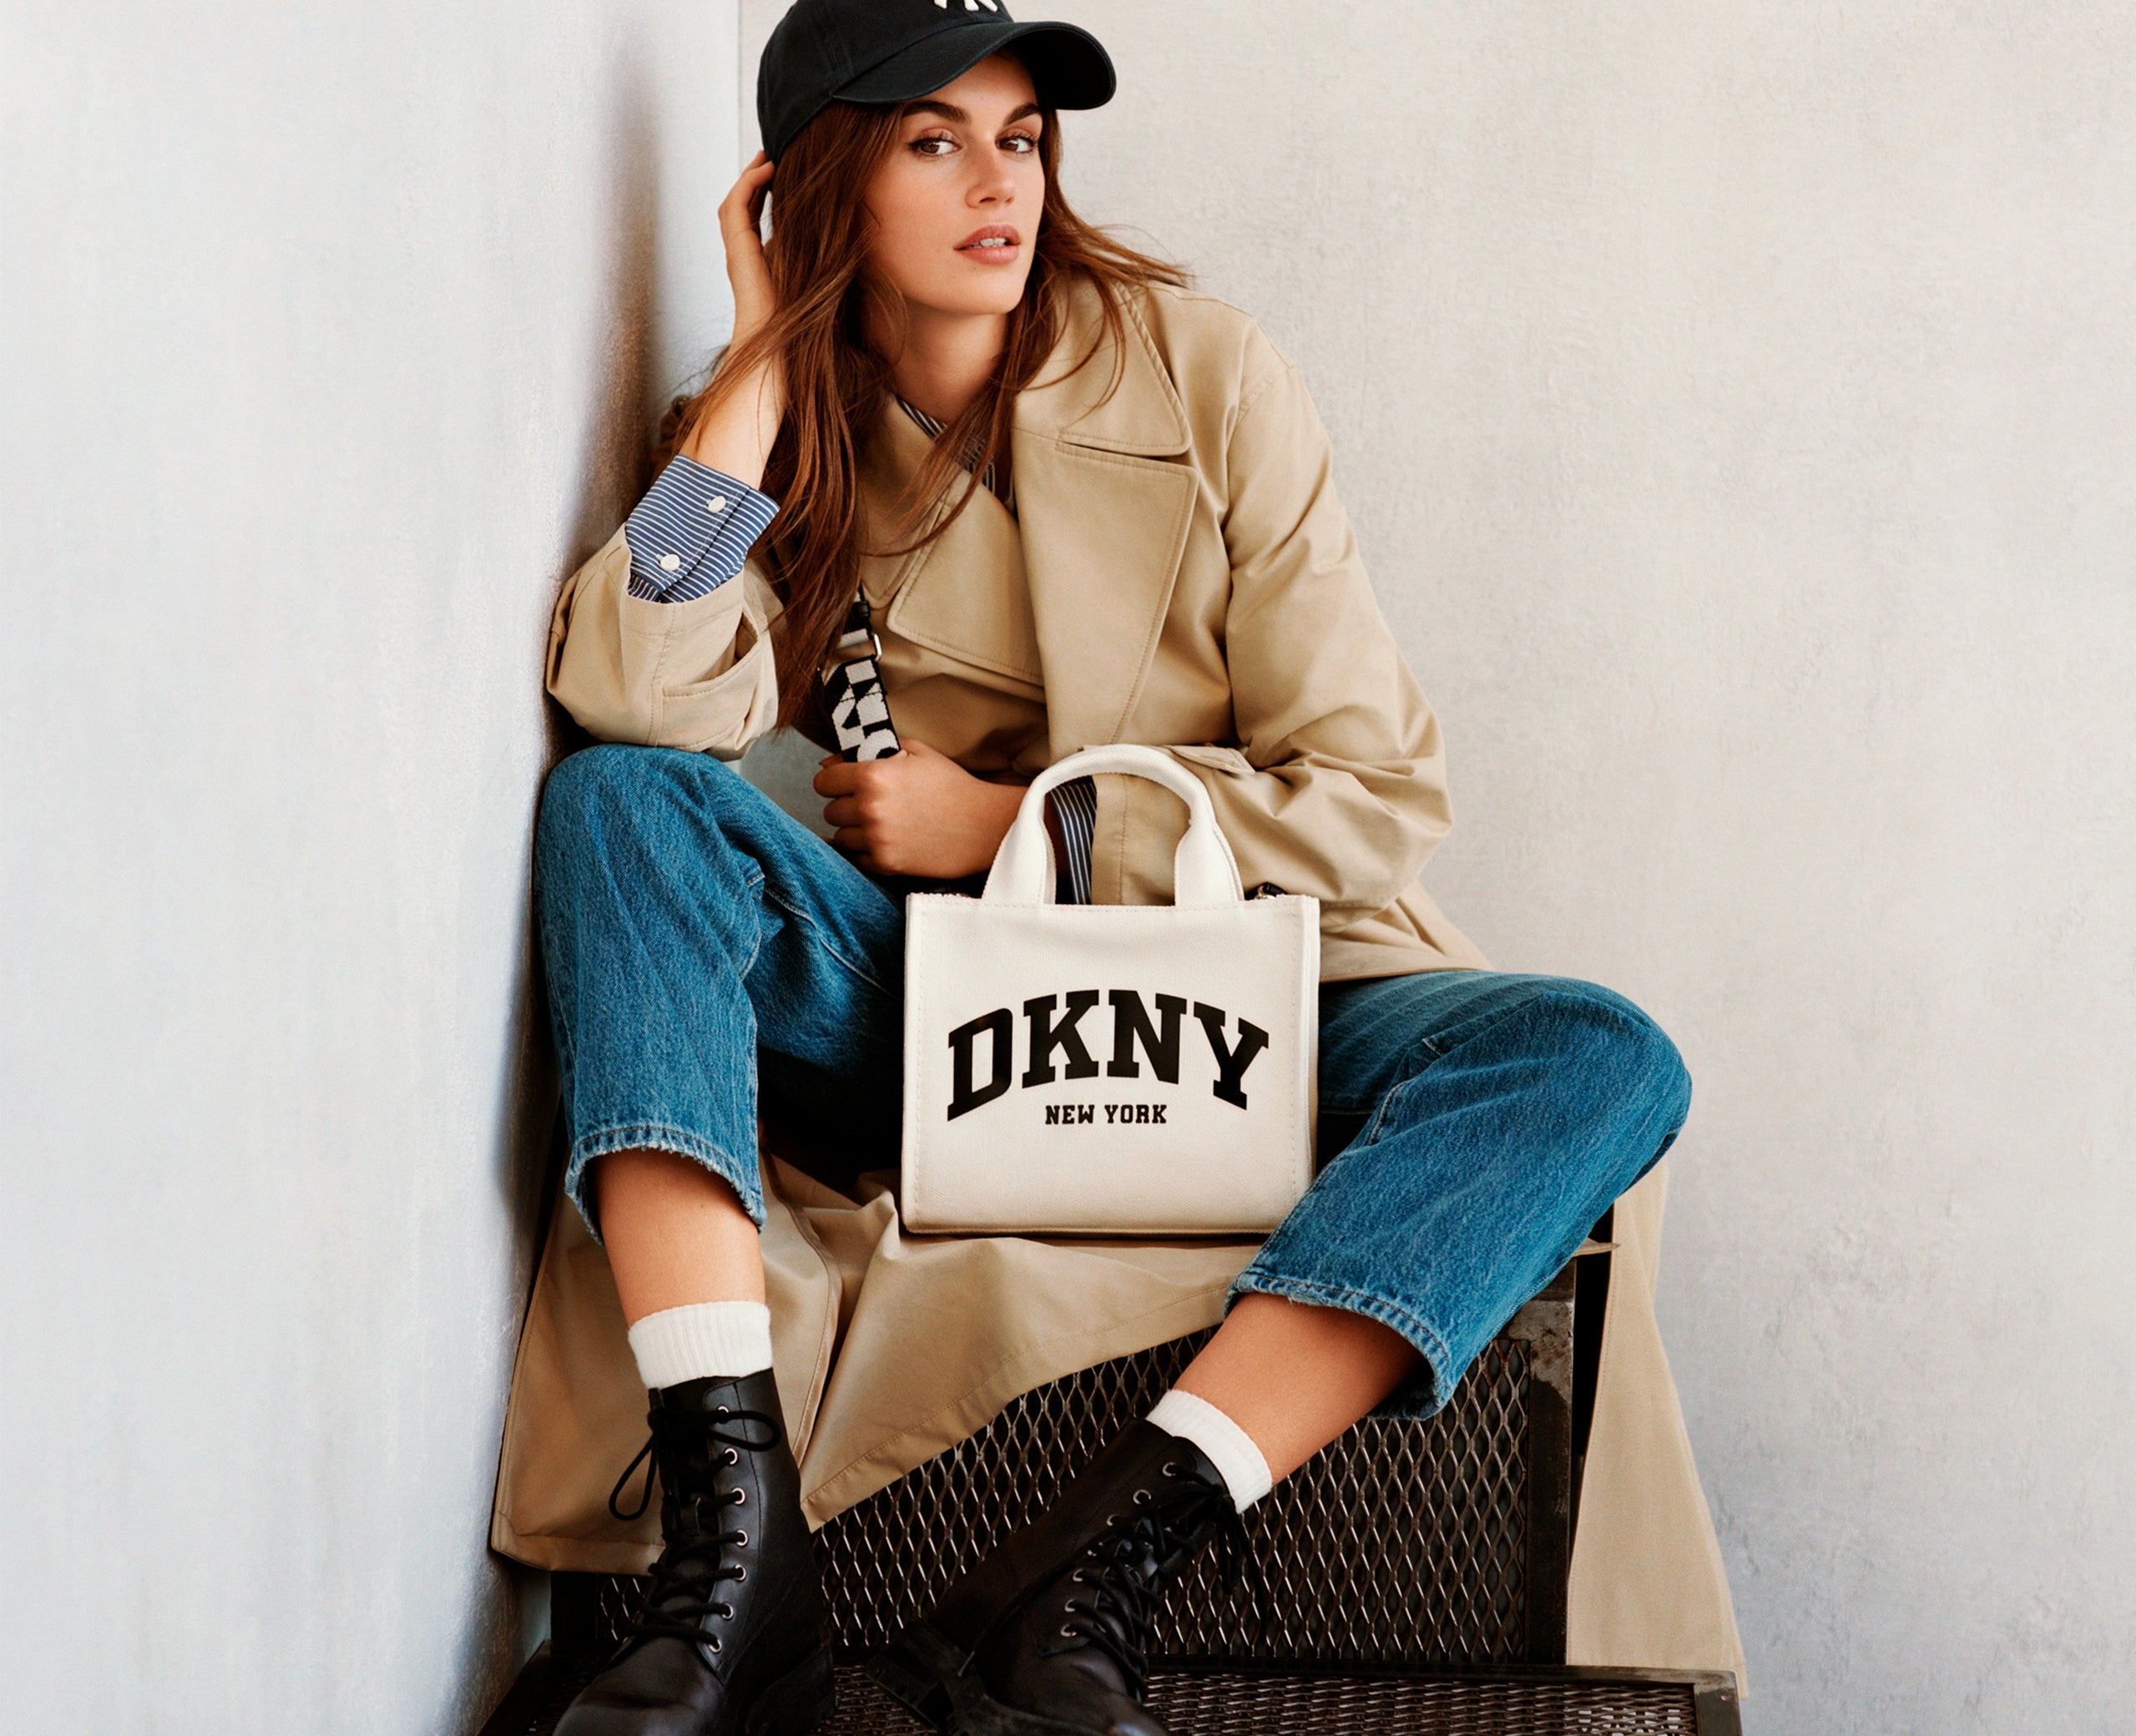 Dkny Leather Handbags - Buy Dkny Leather Handbags online in India